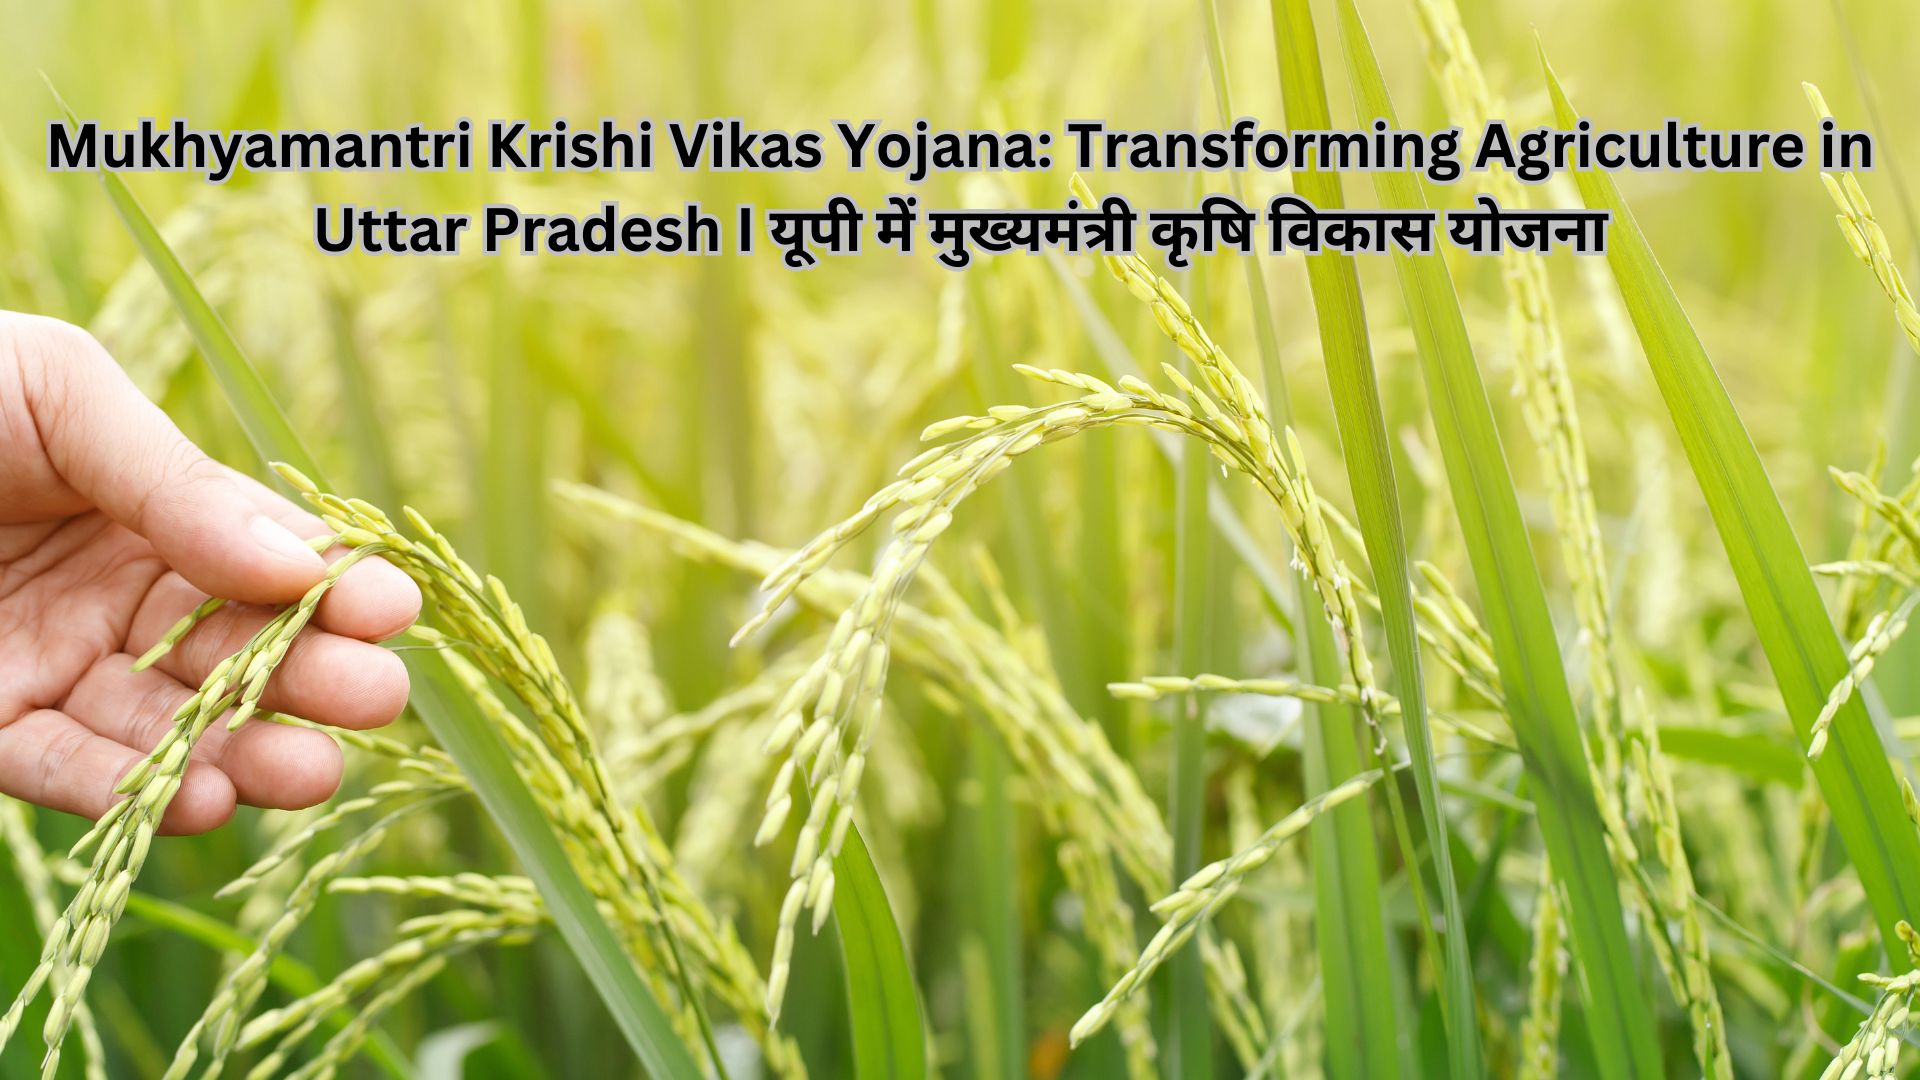 Mukhyamantri Krishi Vikas Yojana: Transforming Agriculture in Uttar Pradesh I यूपी में मुख्यमंत्री कृषि विकास योजना